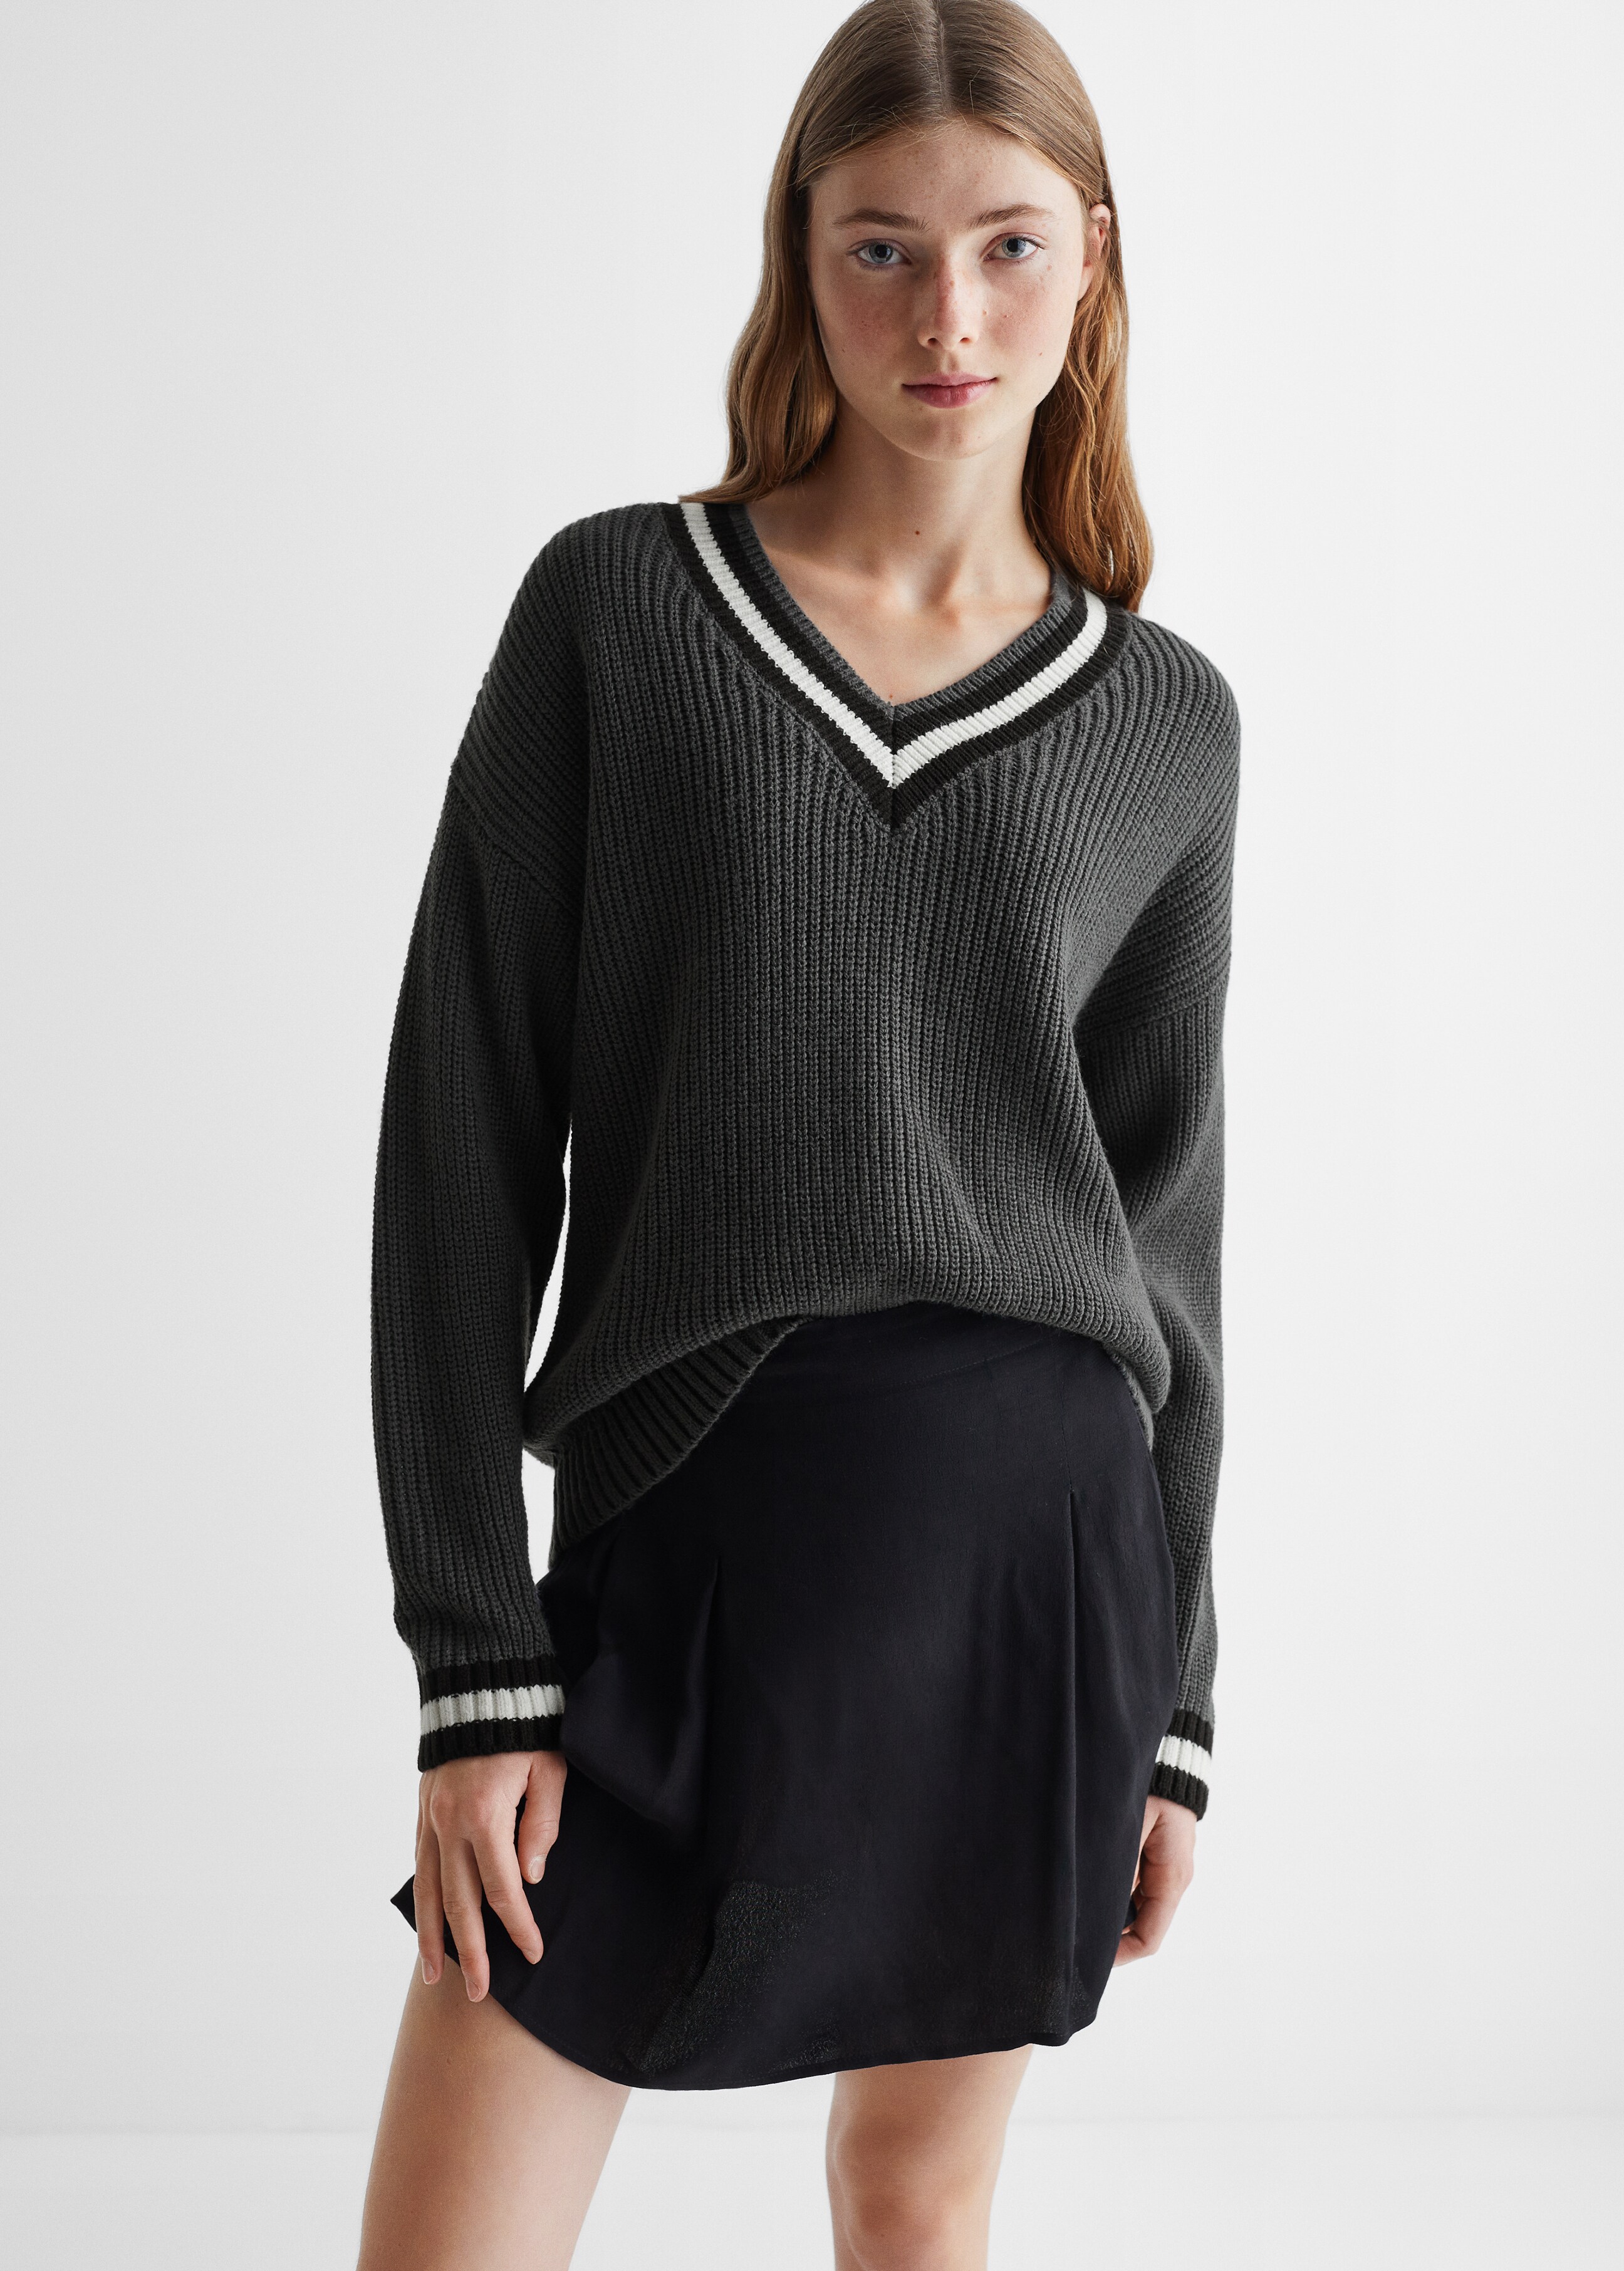 V-neck knit sweater - Medium plane